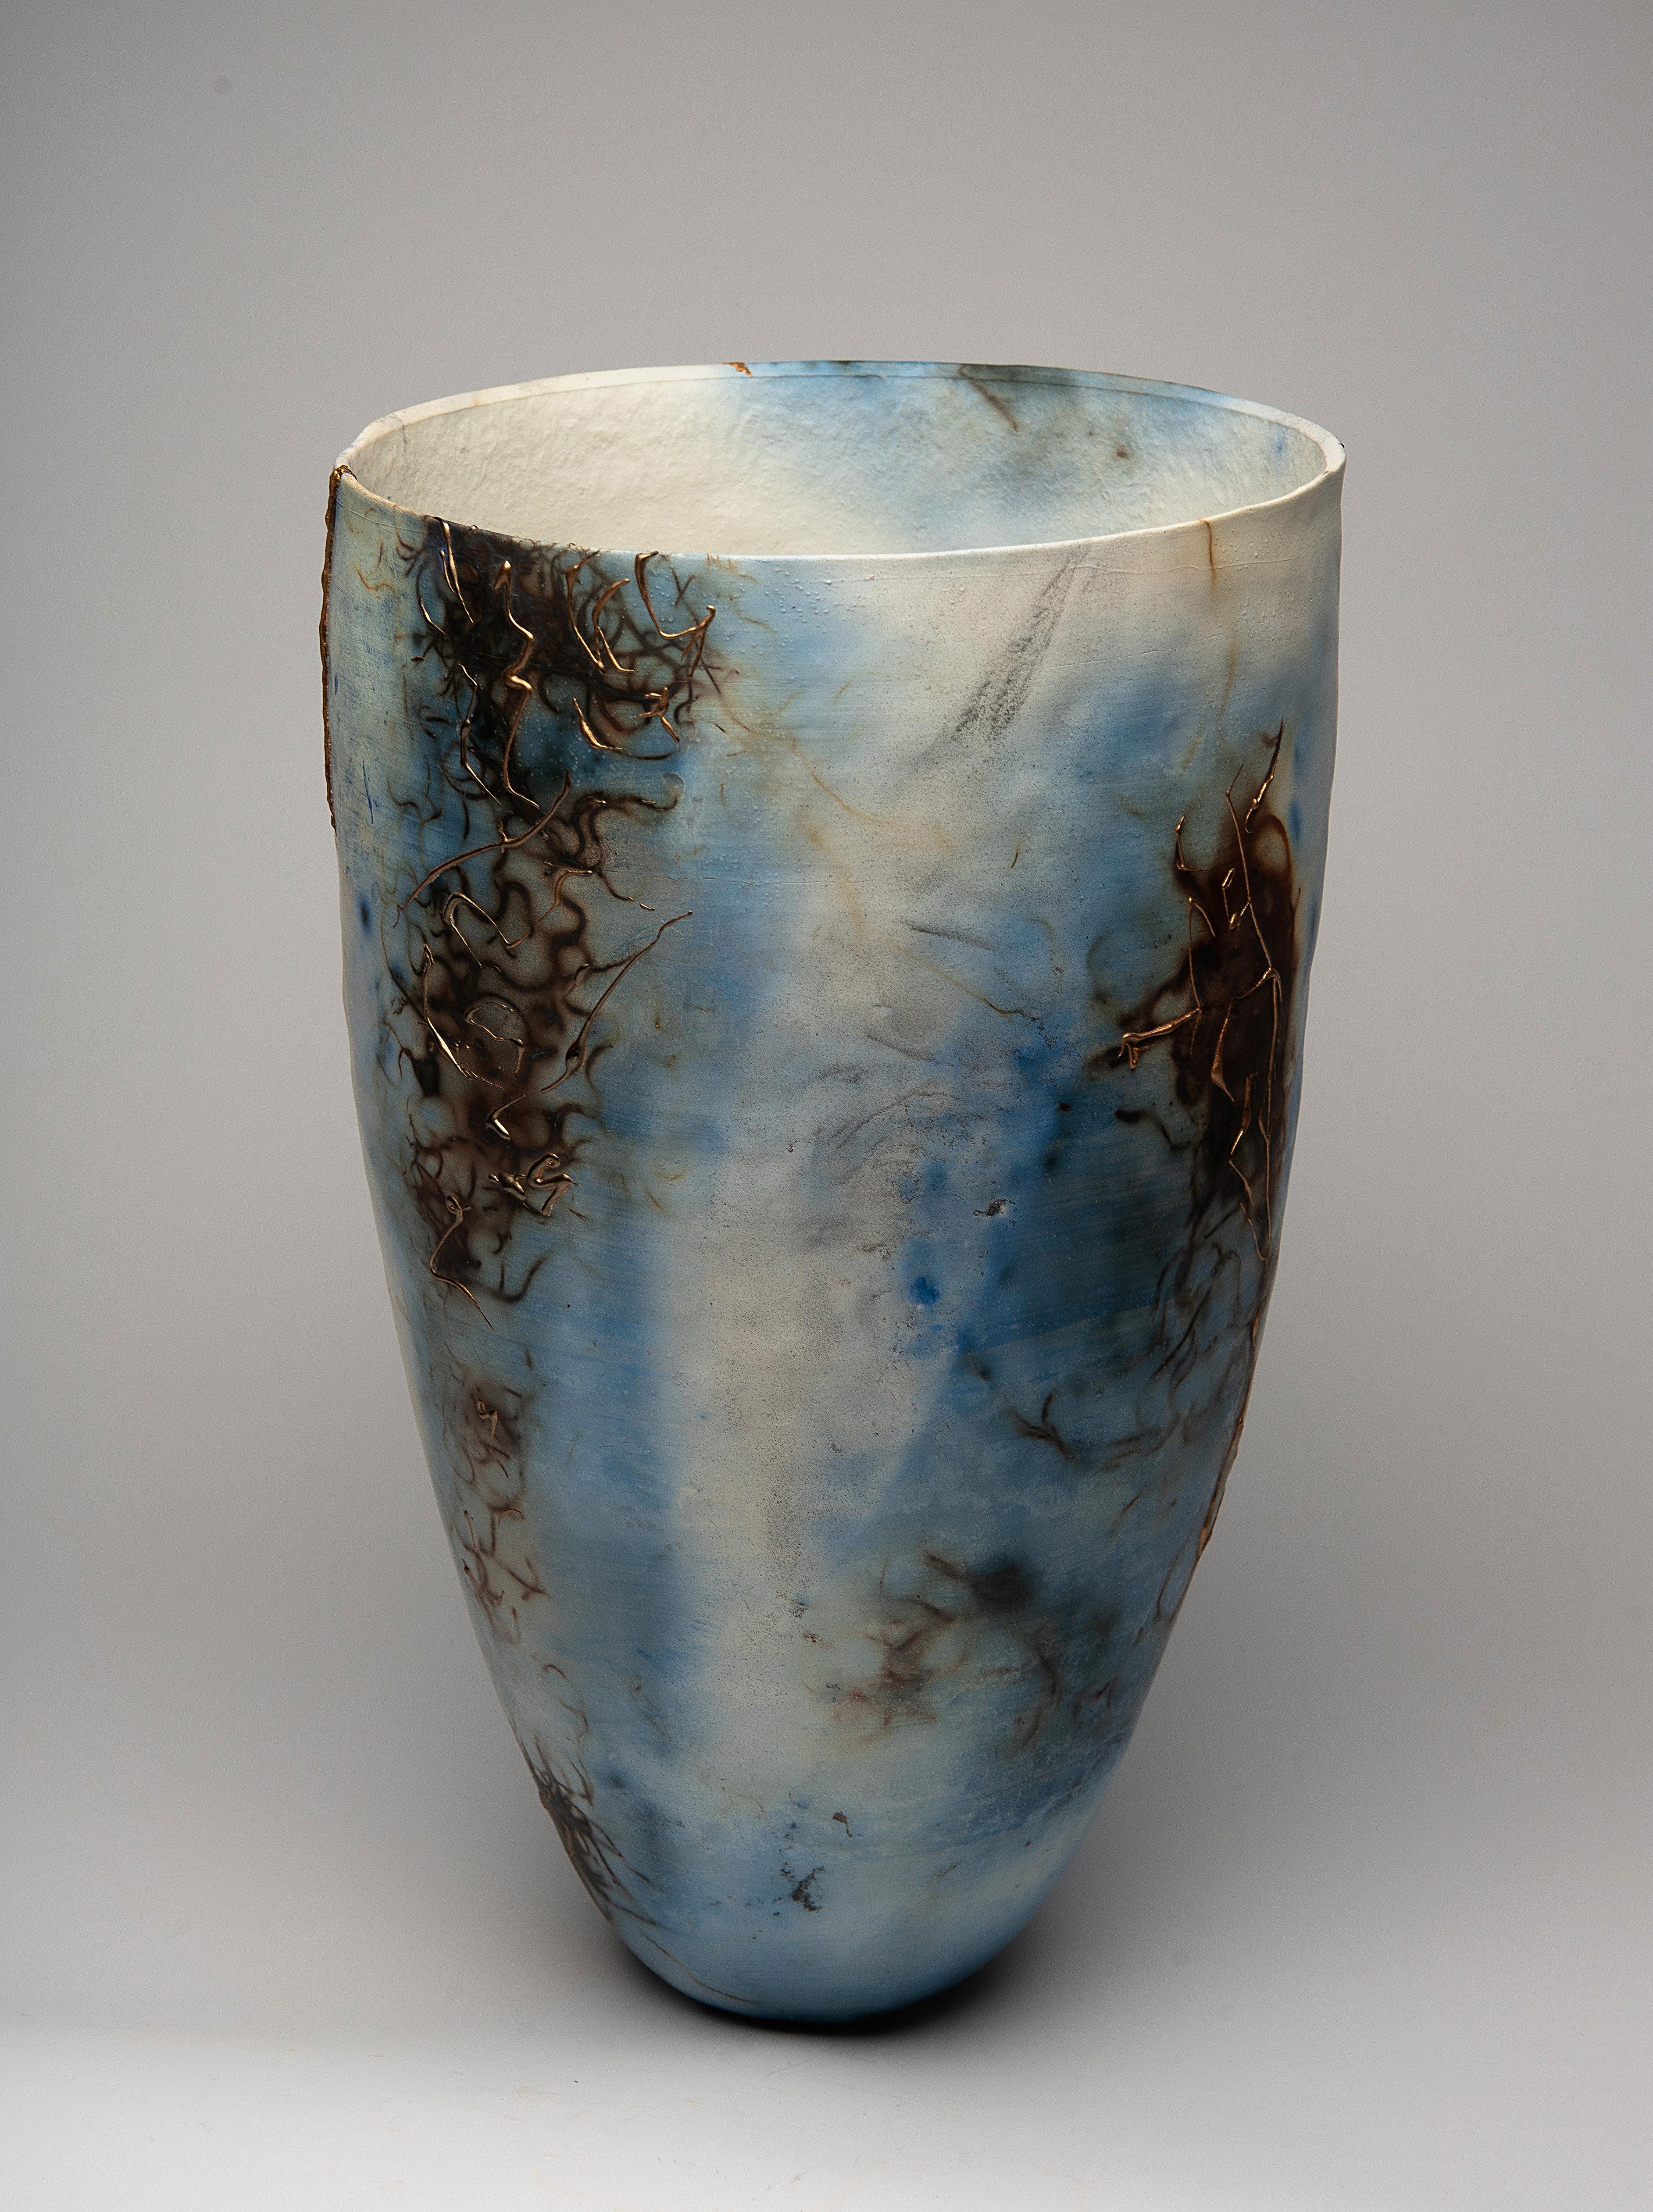 Alison Brannen Abstract Sculpture - "Blue Lagoon", ceramic sculpture, porcelain vase, saggar, blue, copper, gold